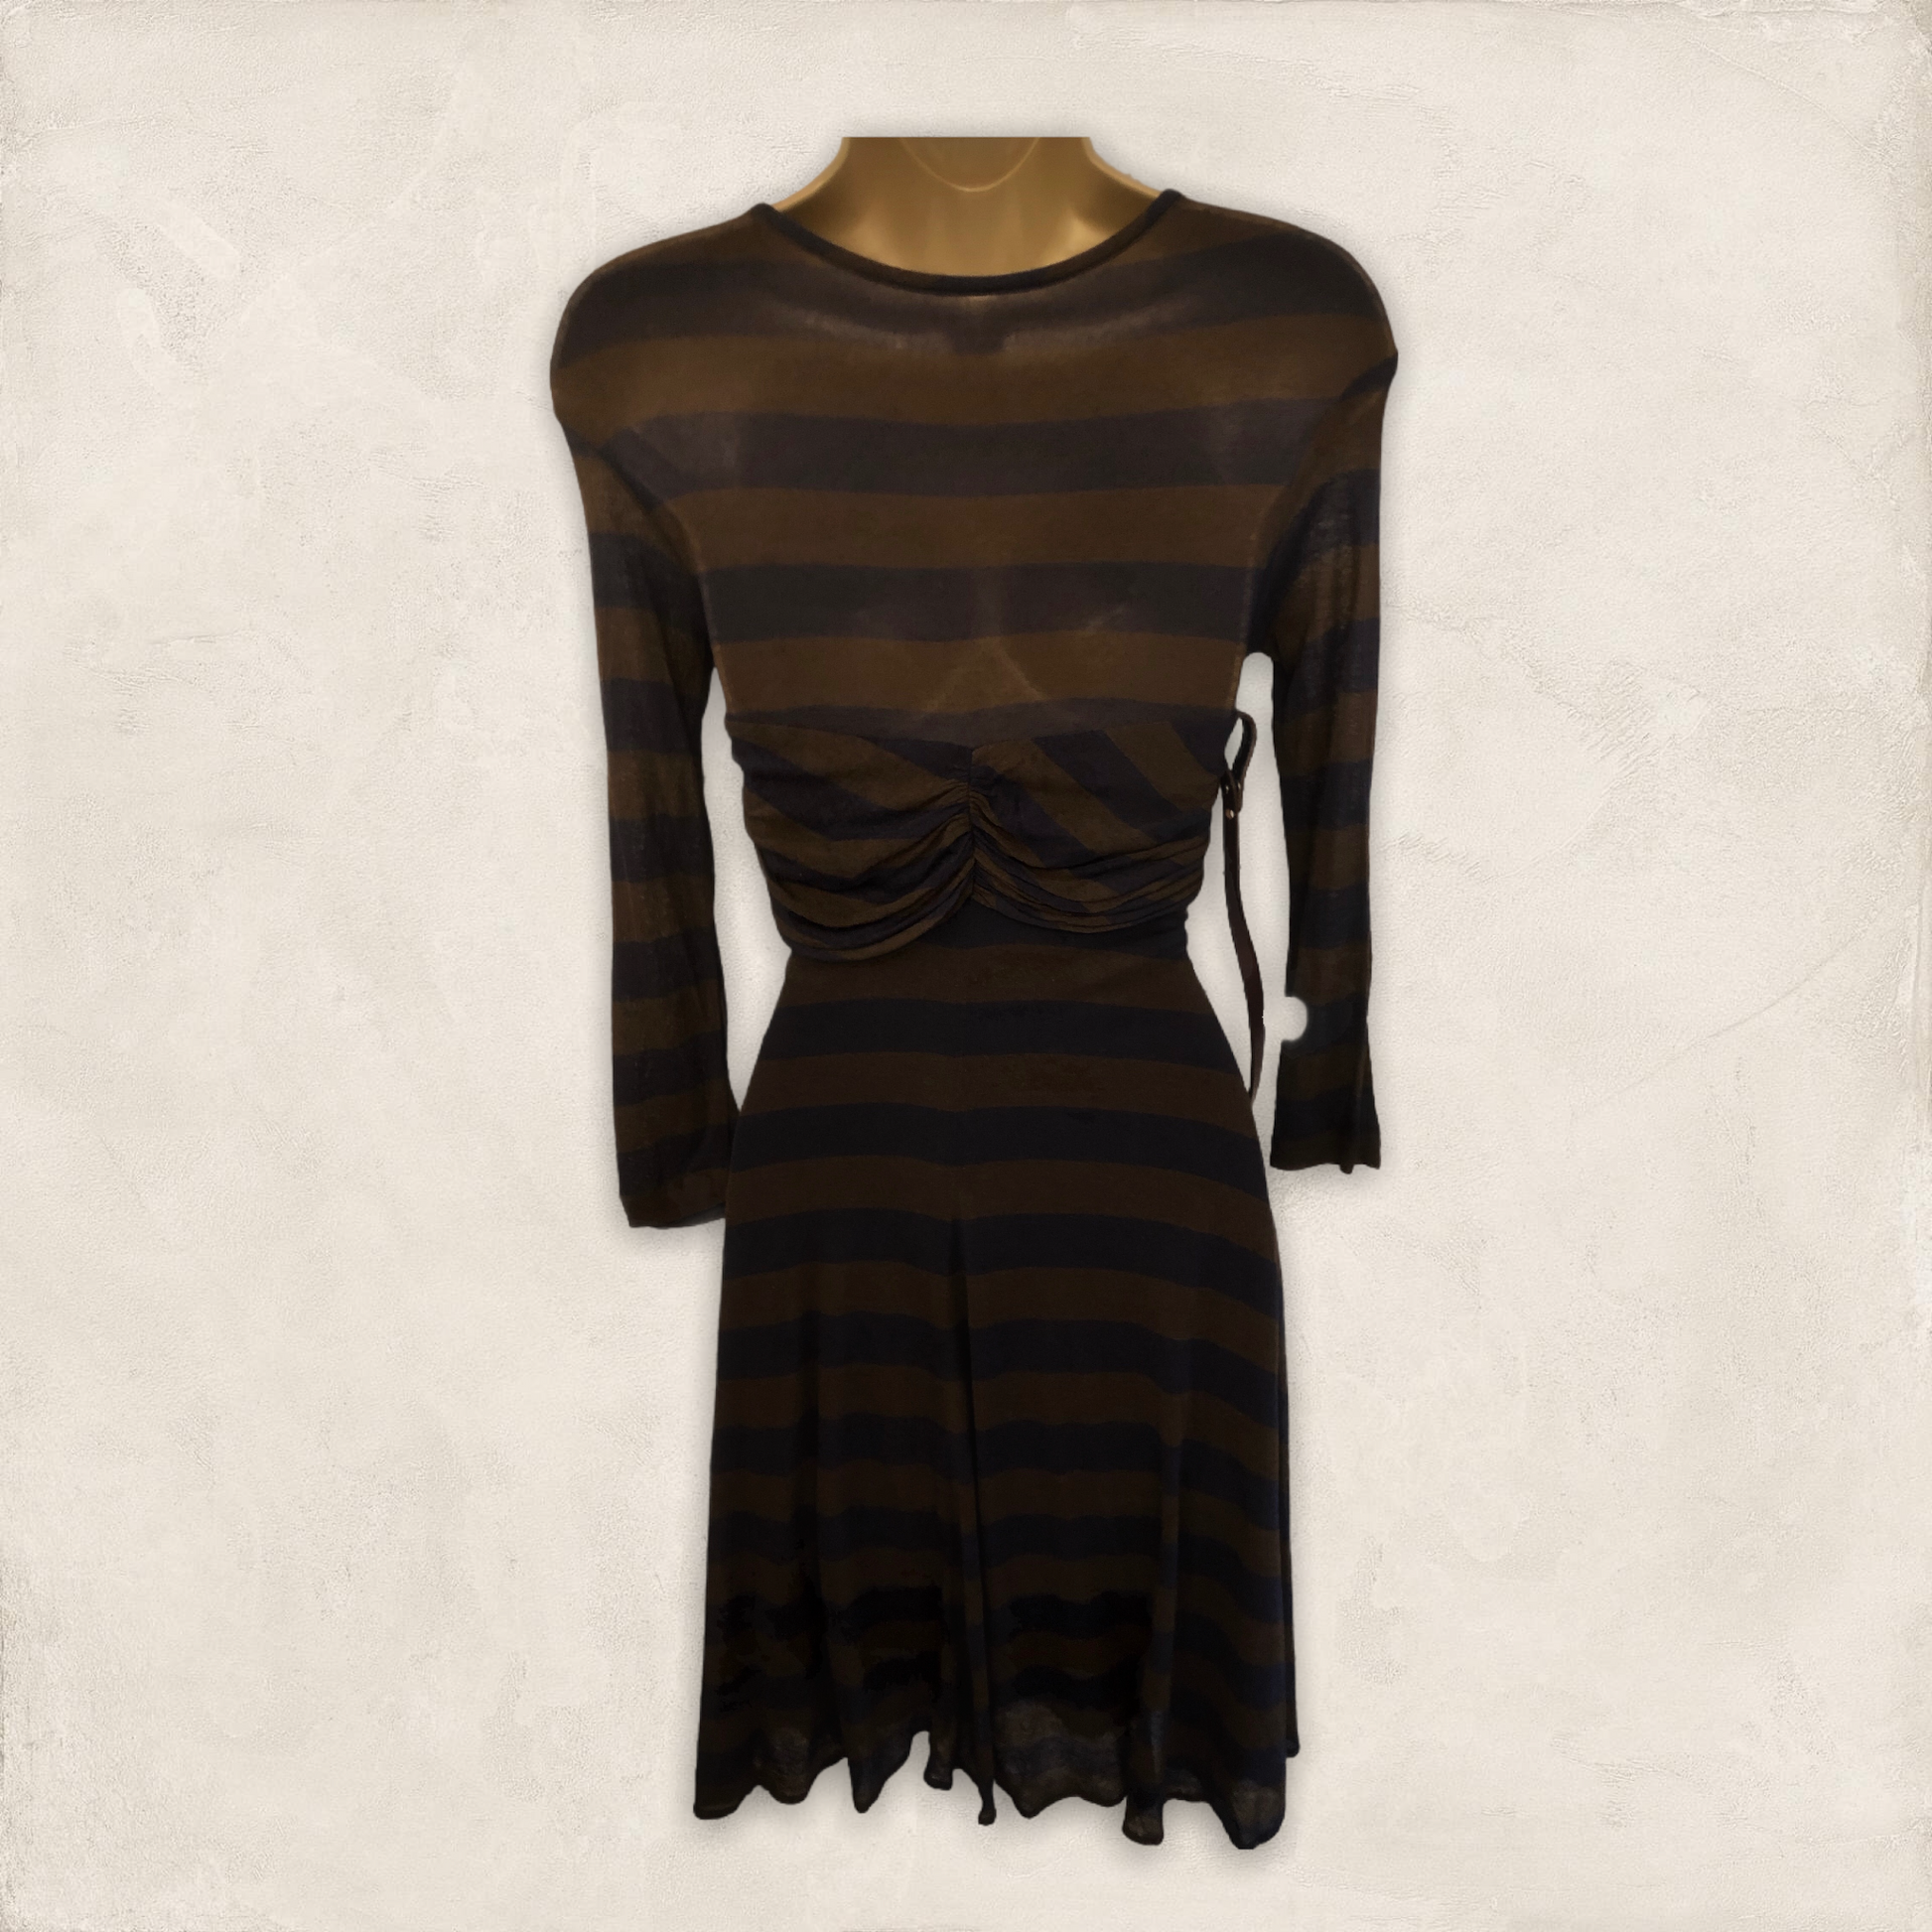 Yigal Azrouel Storm Blue & Earth Brown Striped Dress UK 8 US 4 EU 36 BNWT RRP £490 Timeless Fashions